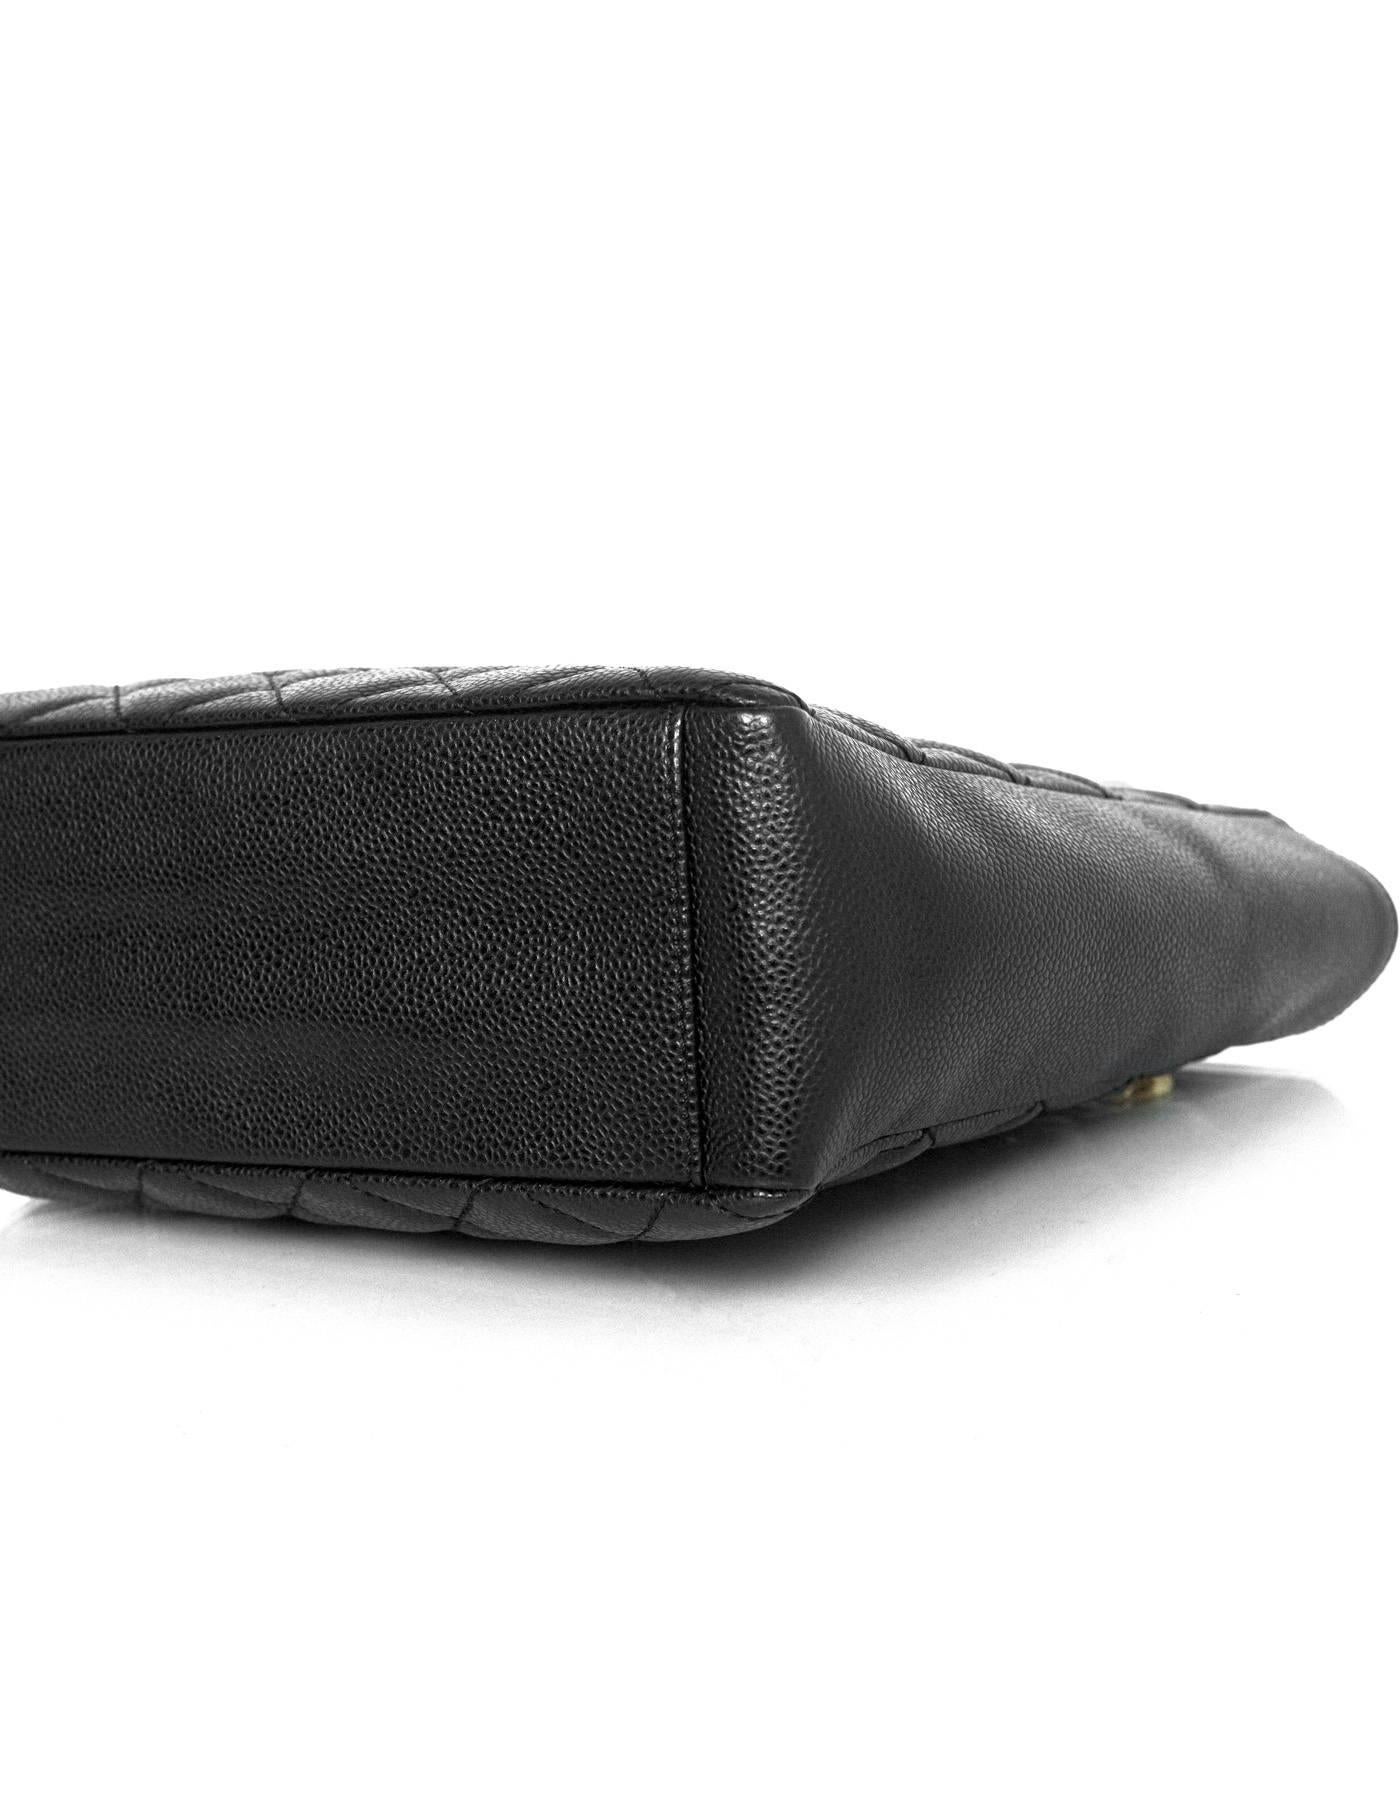 Chanel Black Caviar Leather PST Petite Shopper Tote Bag GHW 1